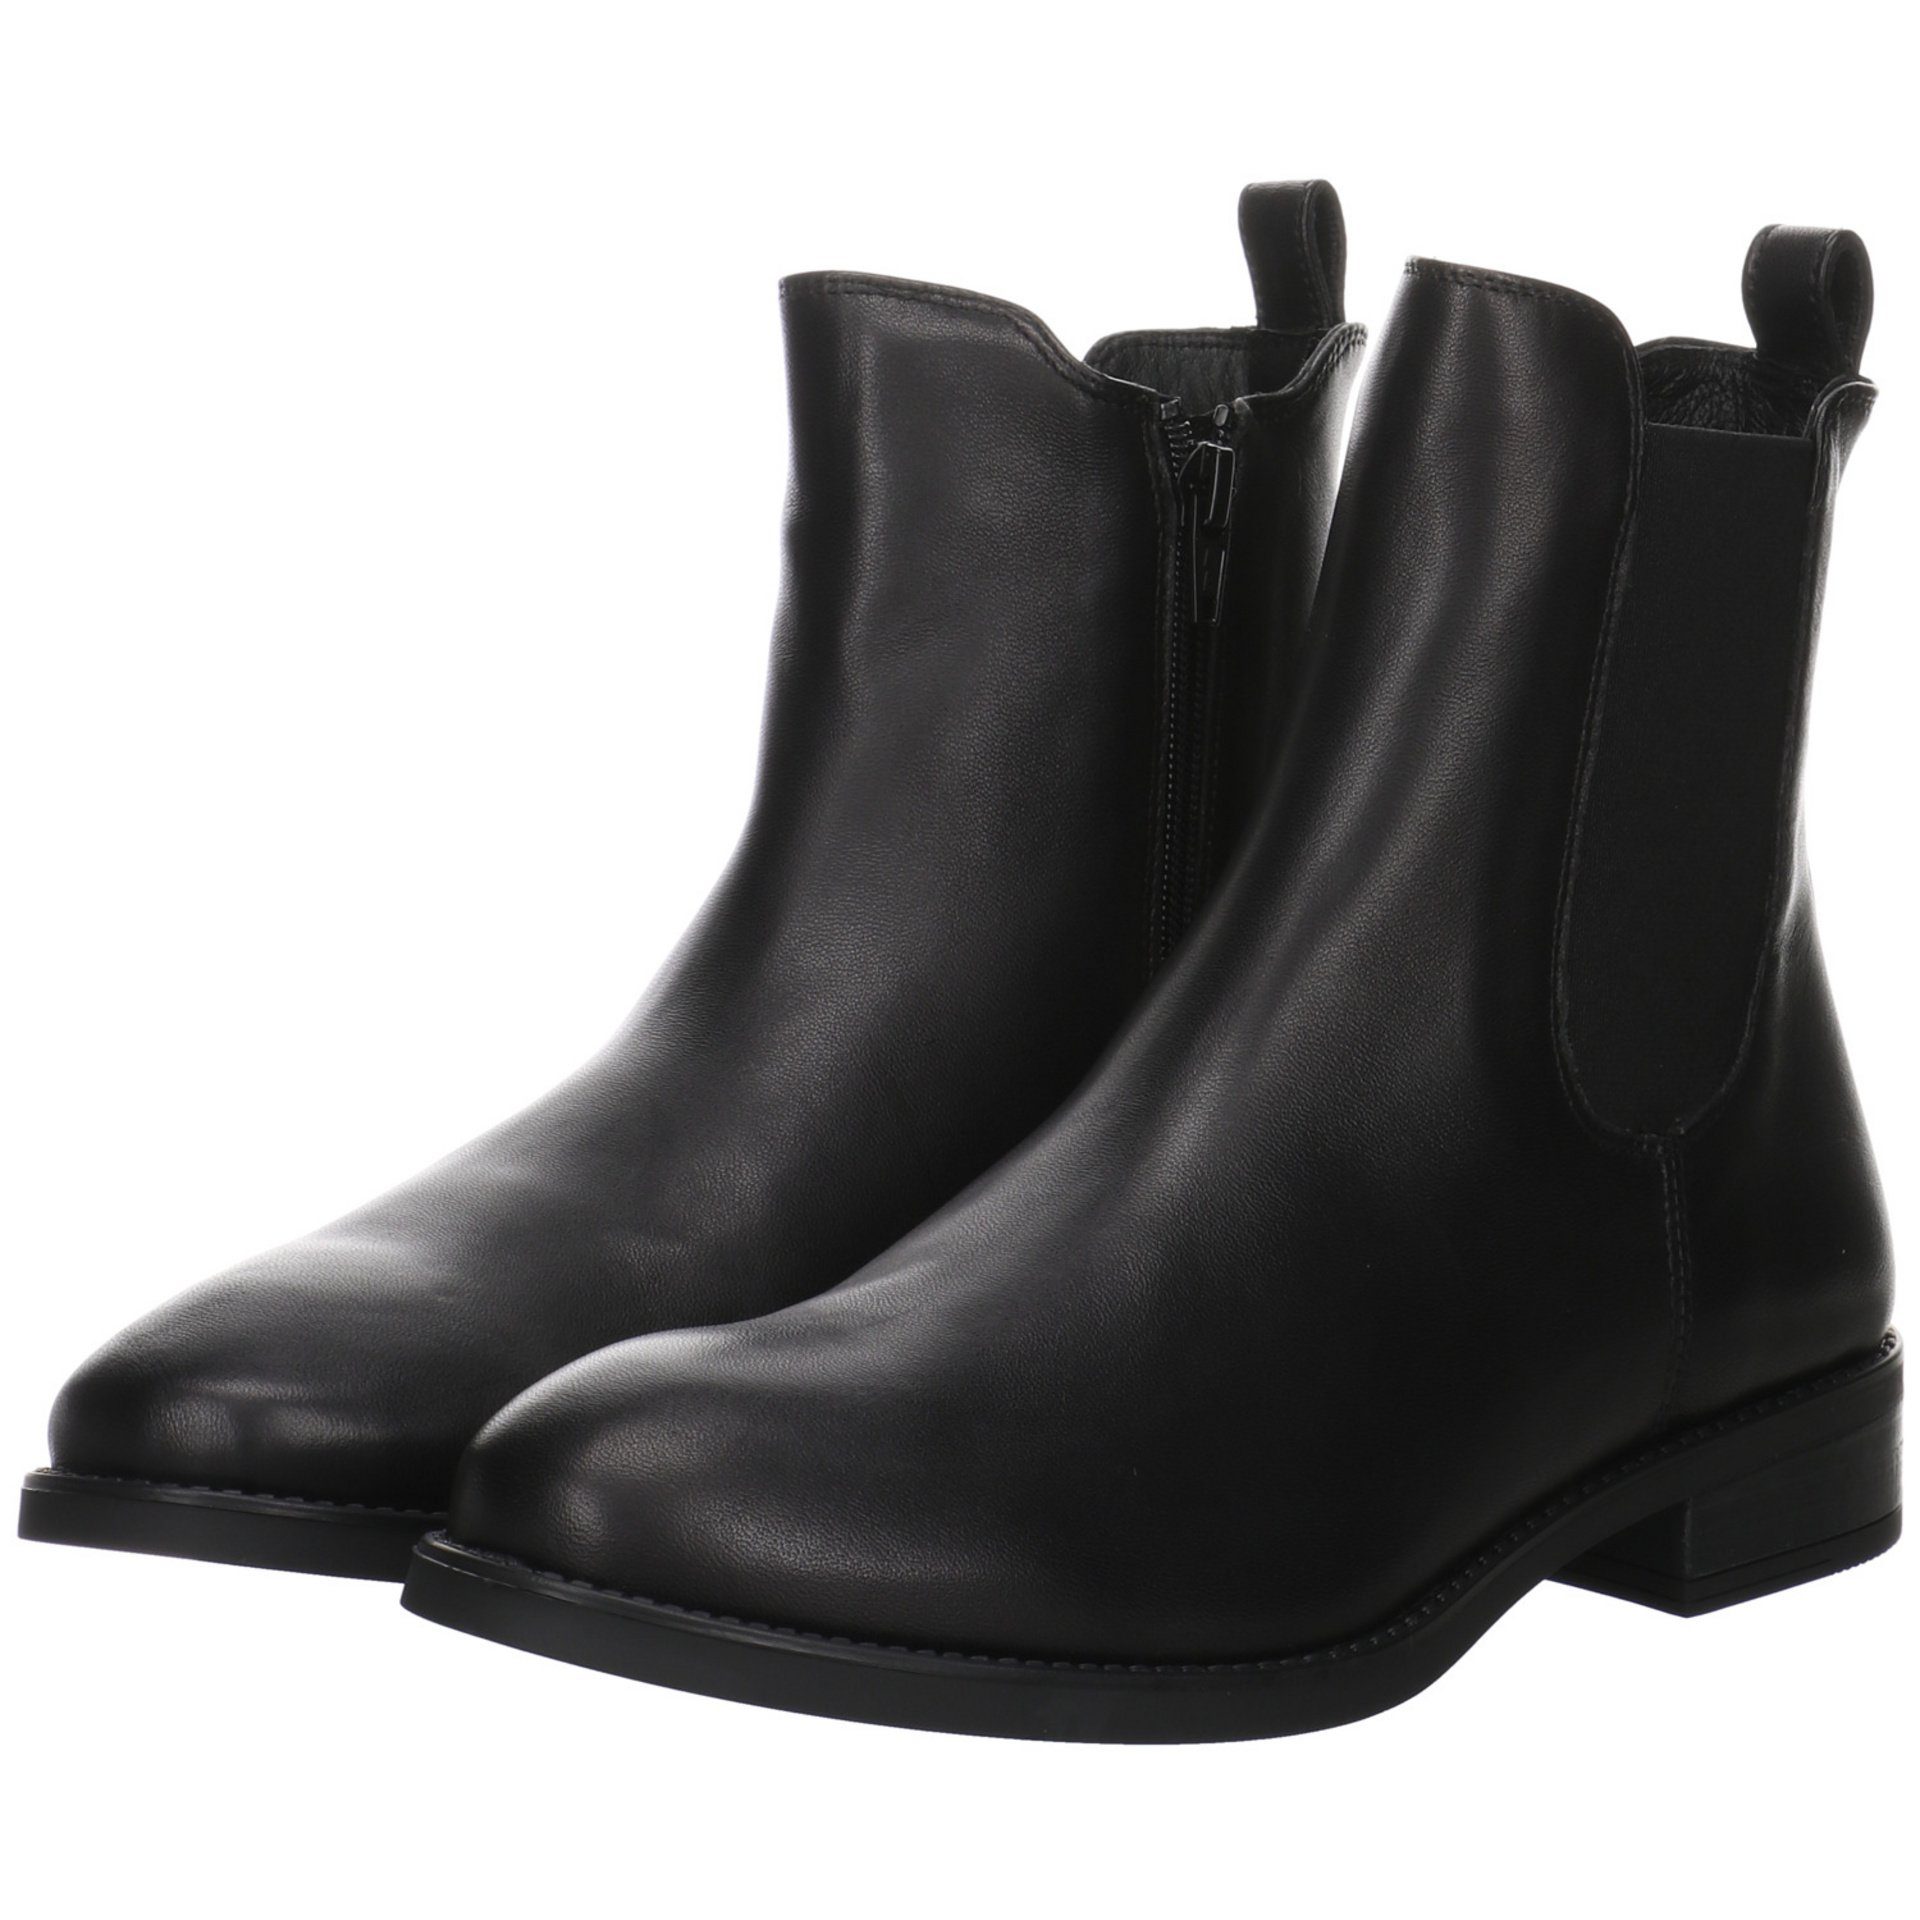 Damen Barty Unisa black Stiefeletten Stiefelette Chelsea Schuhe Boots Leder-/Textilkombination